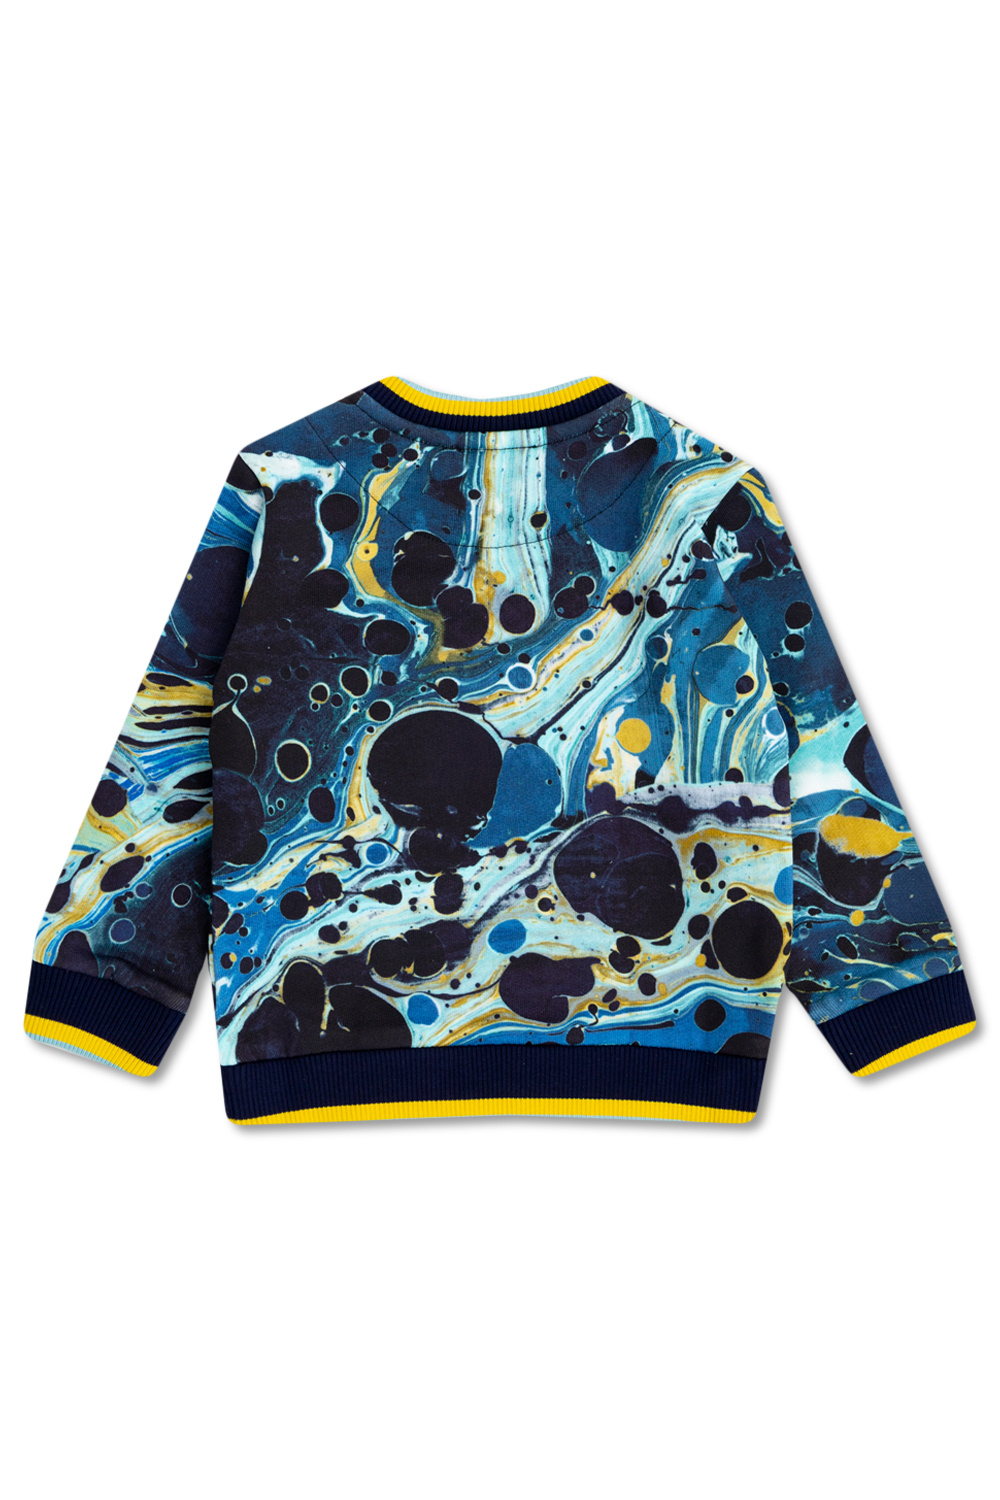 dolce combat & Gabbana Kids Patterned sweatshirt